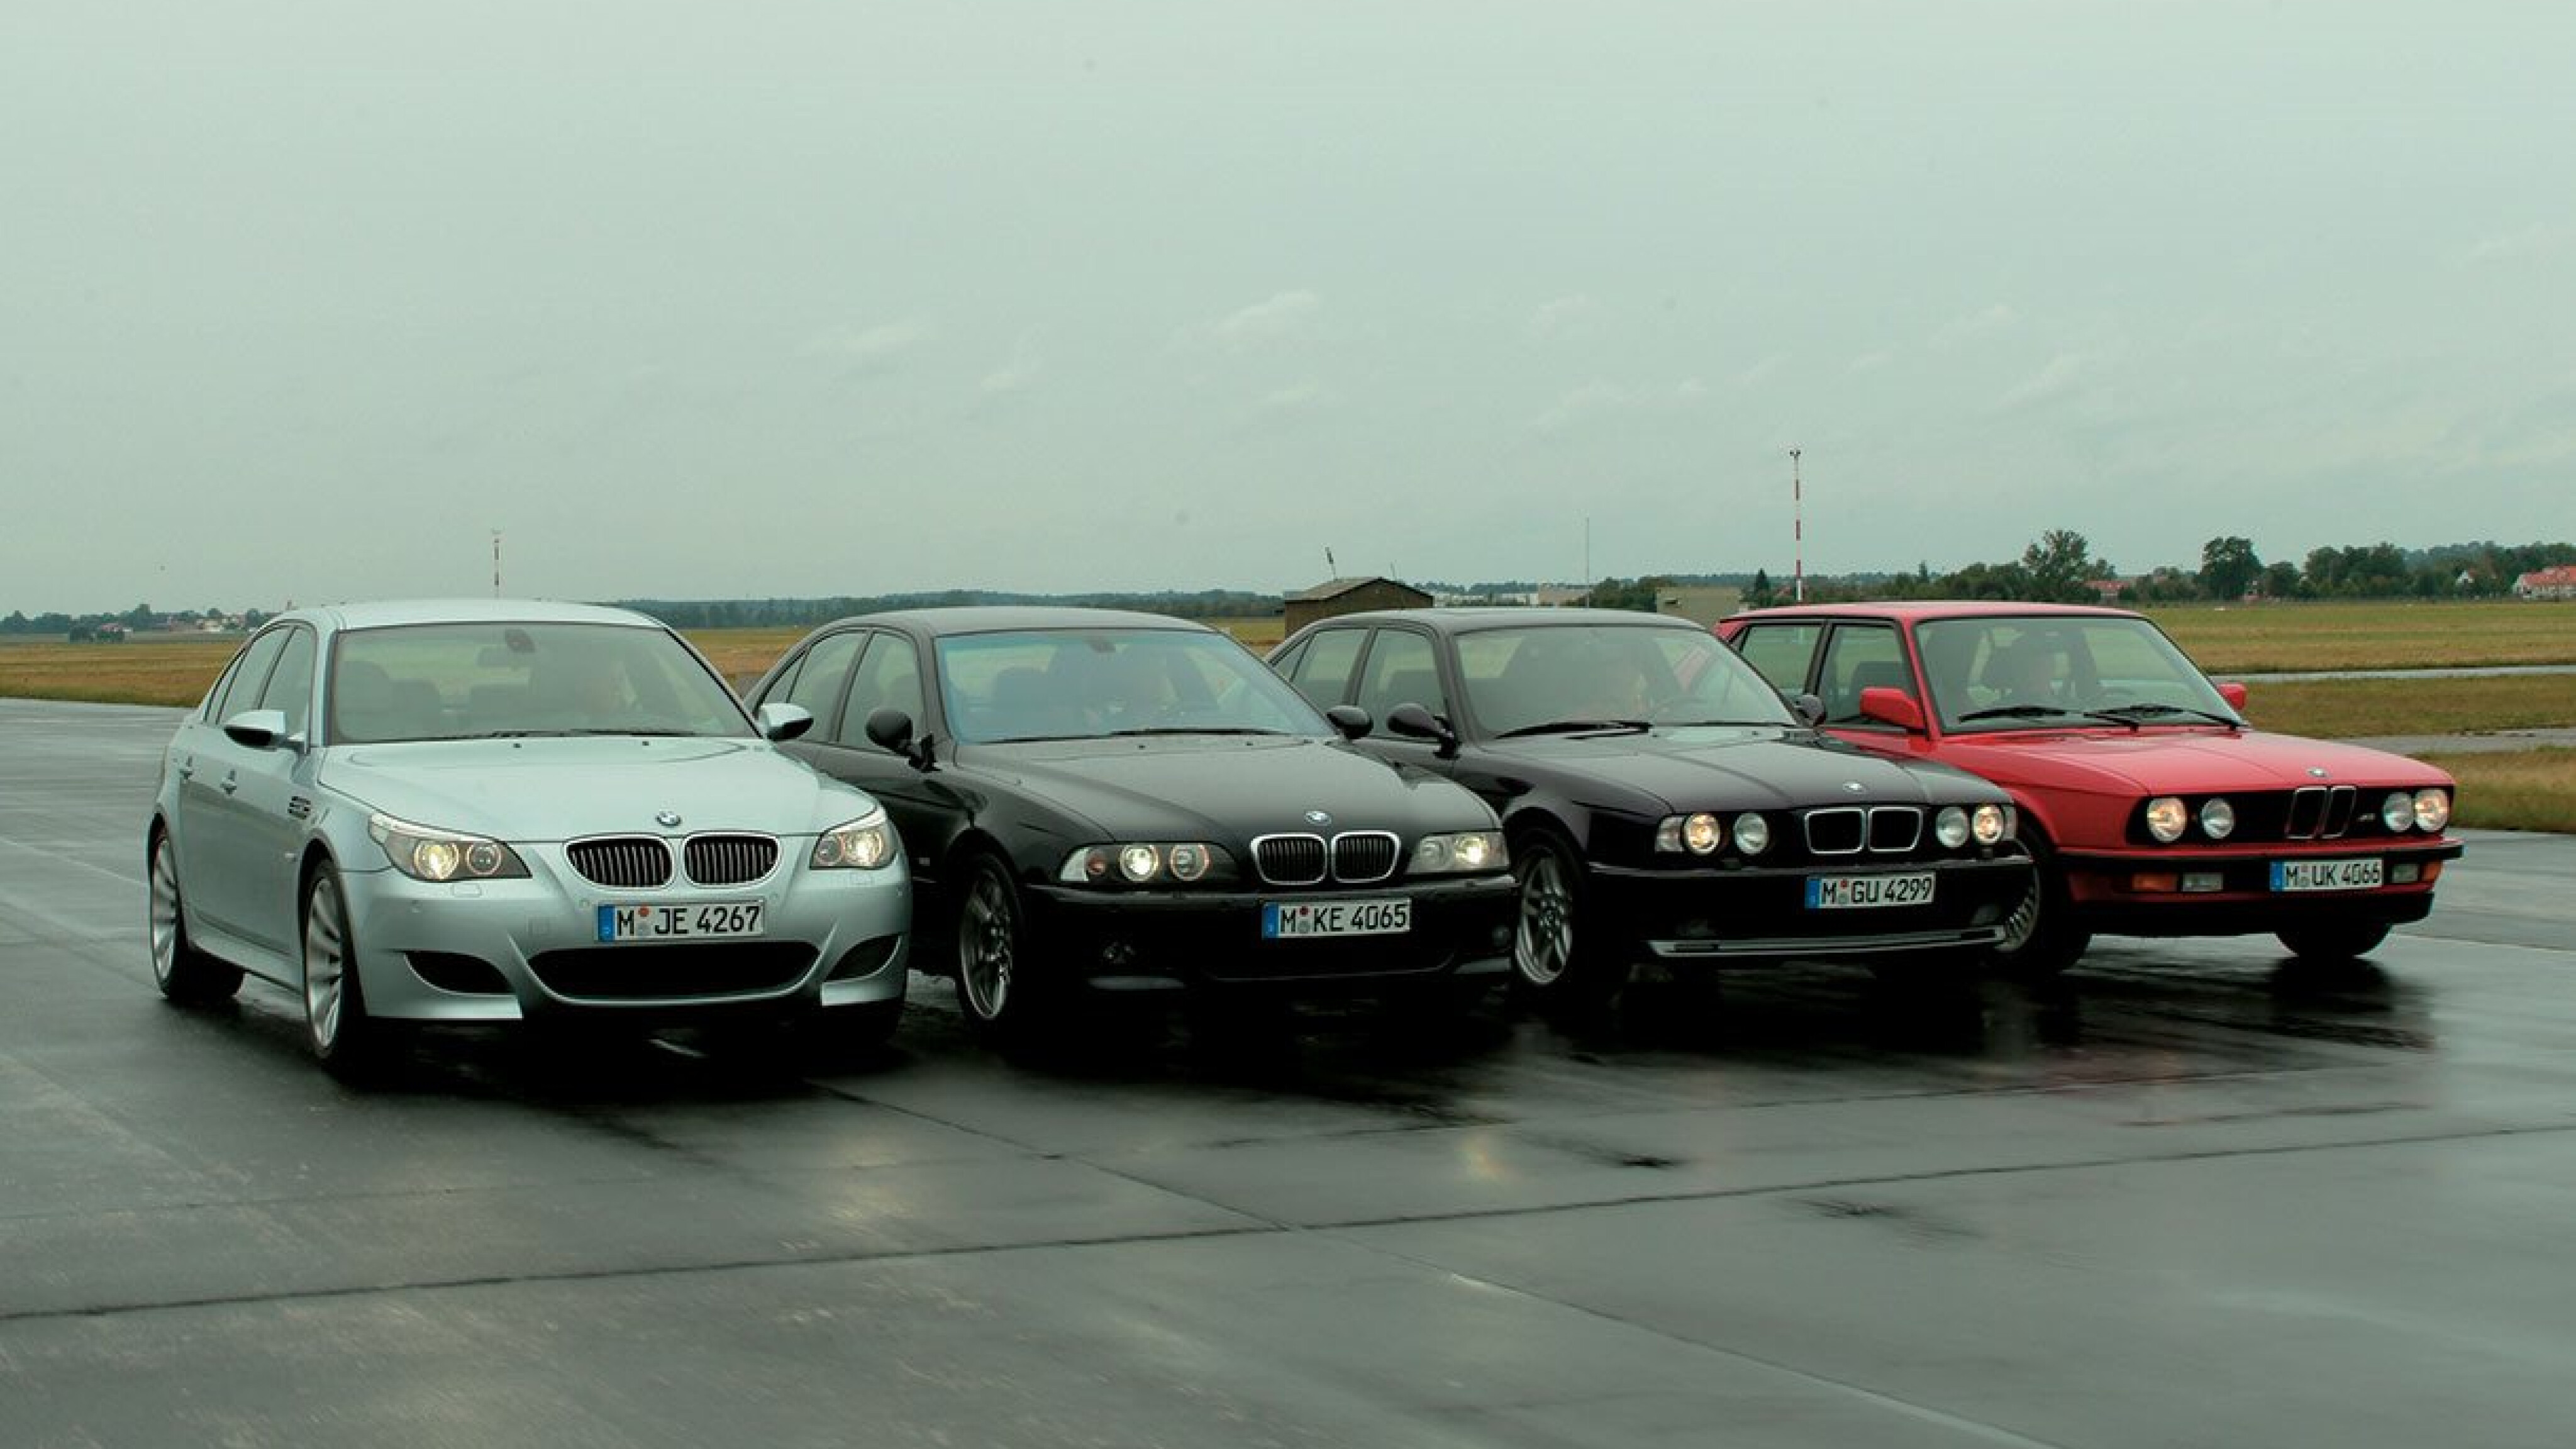 UK collector auctions BMW M5 fleet